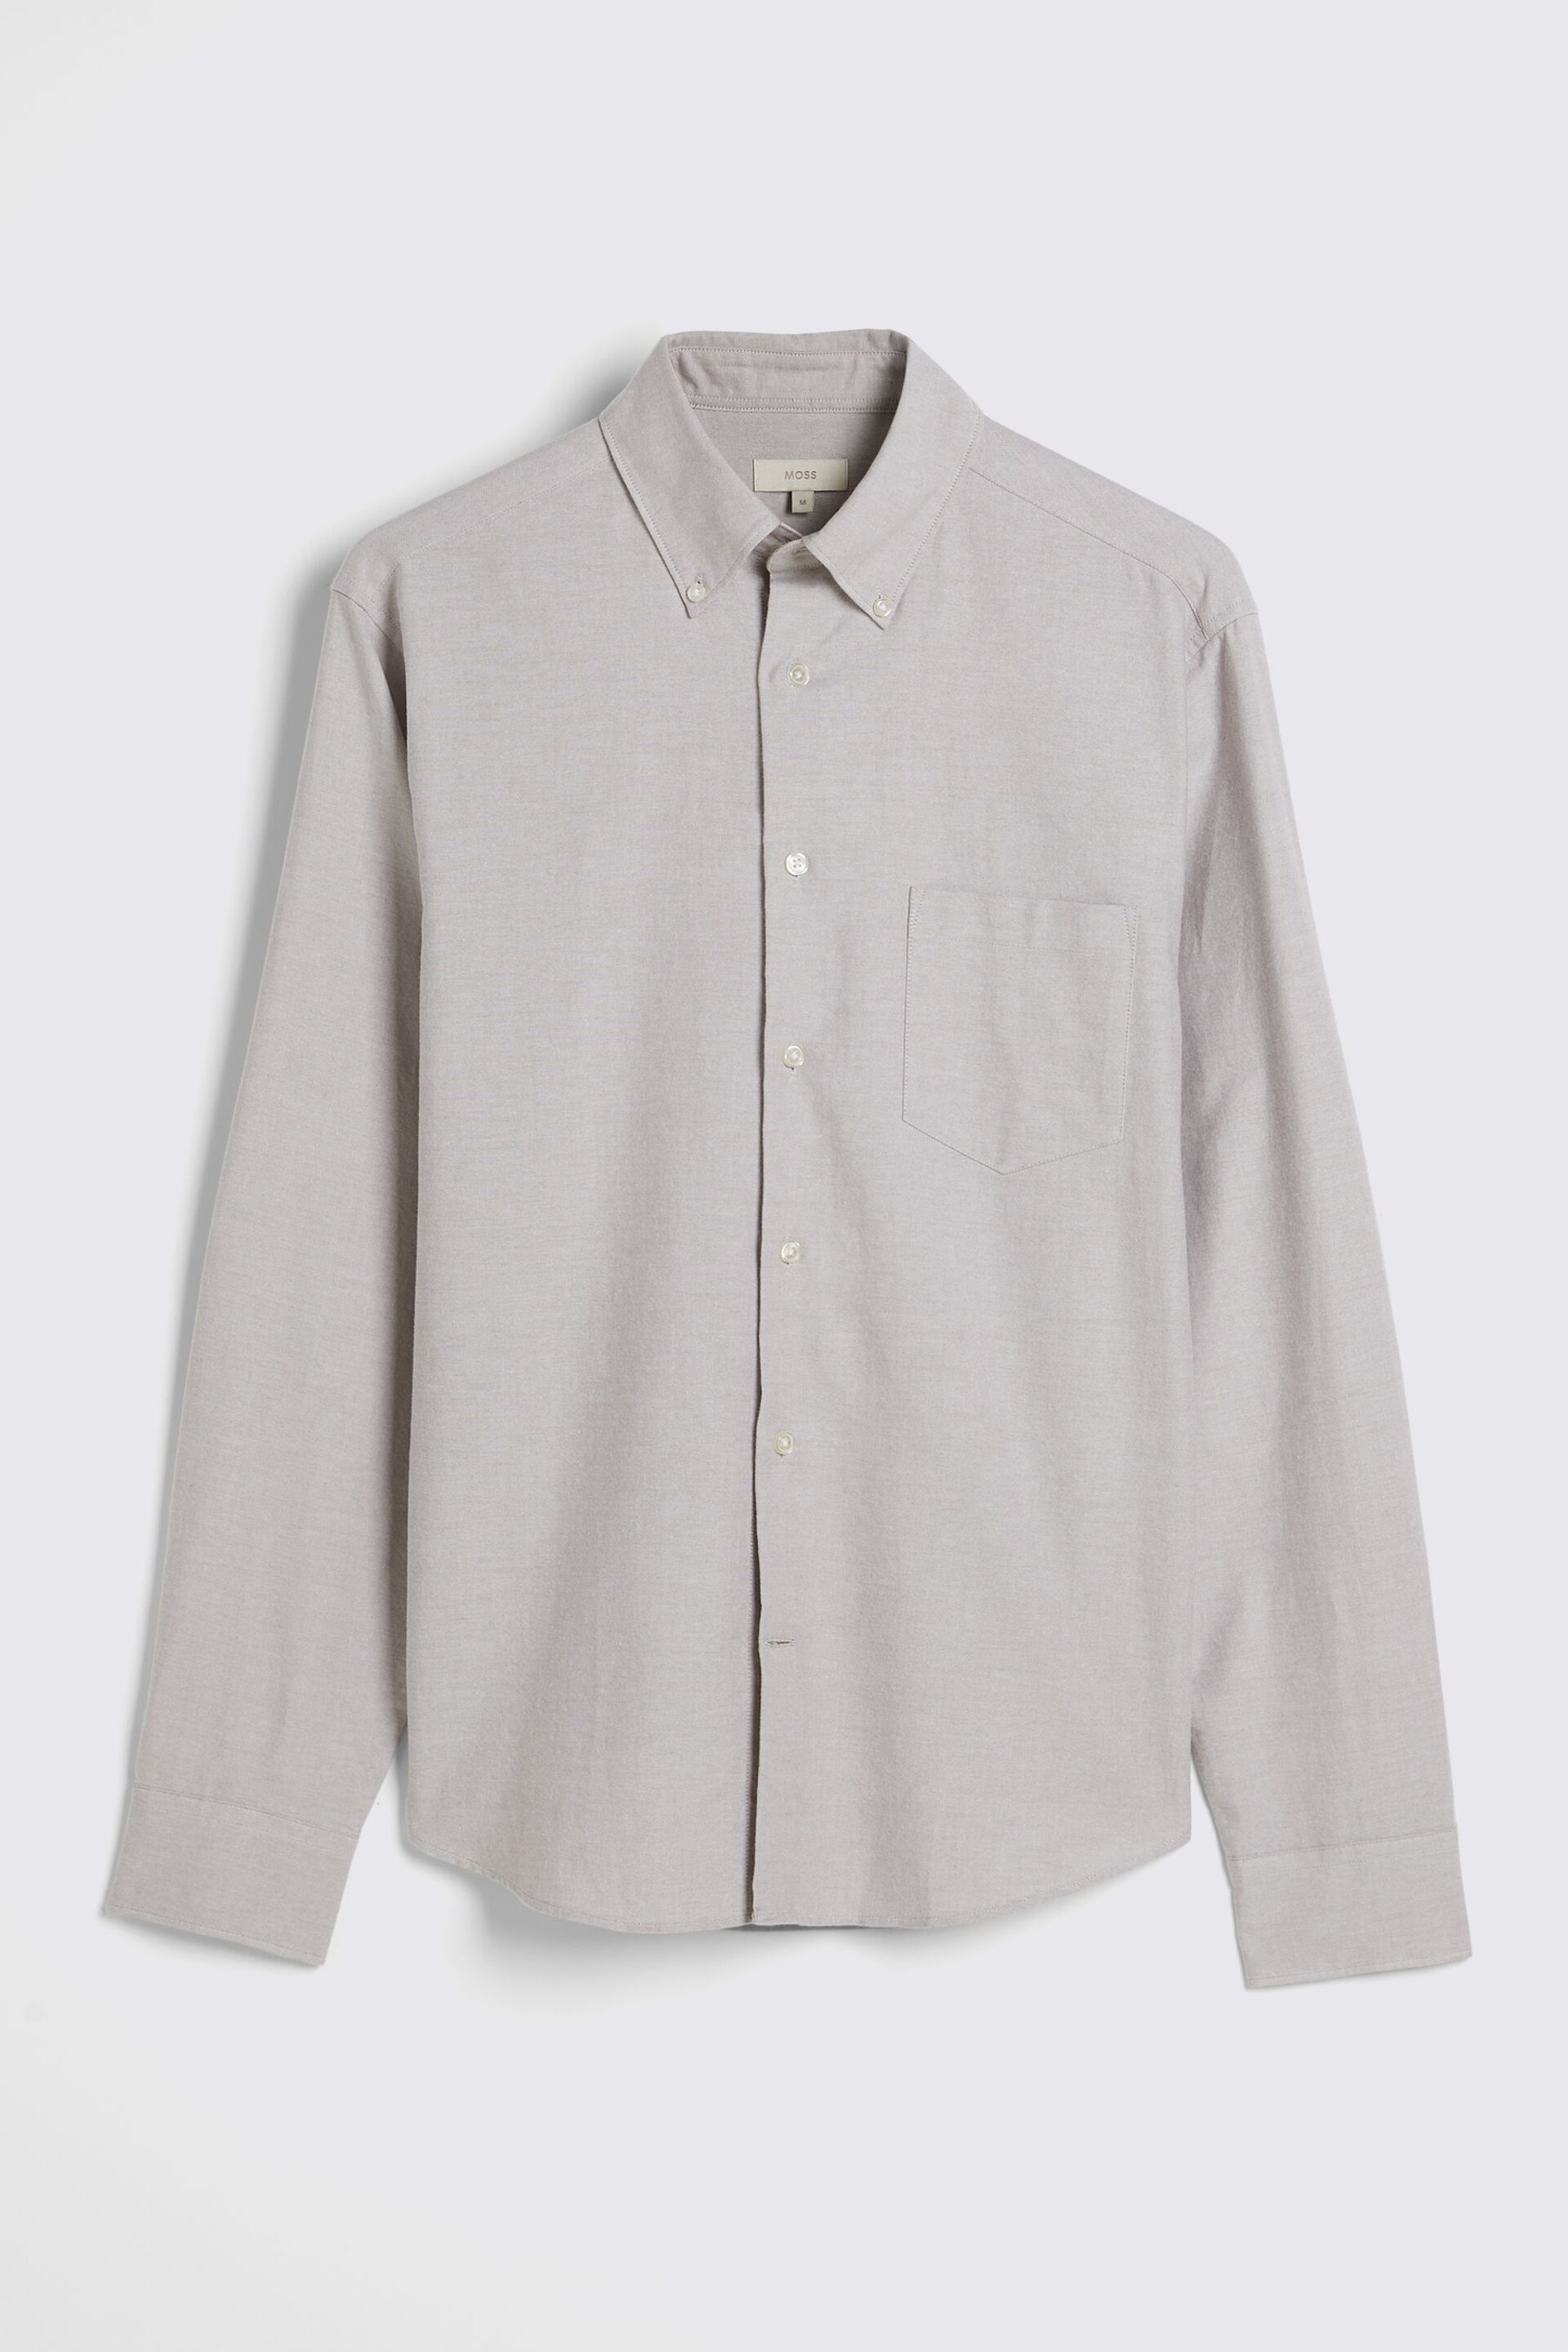 MOSS White/Grey Washed Oxford Shirt - Image 4 of 5